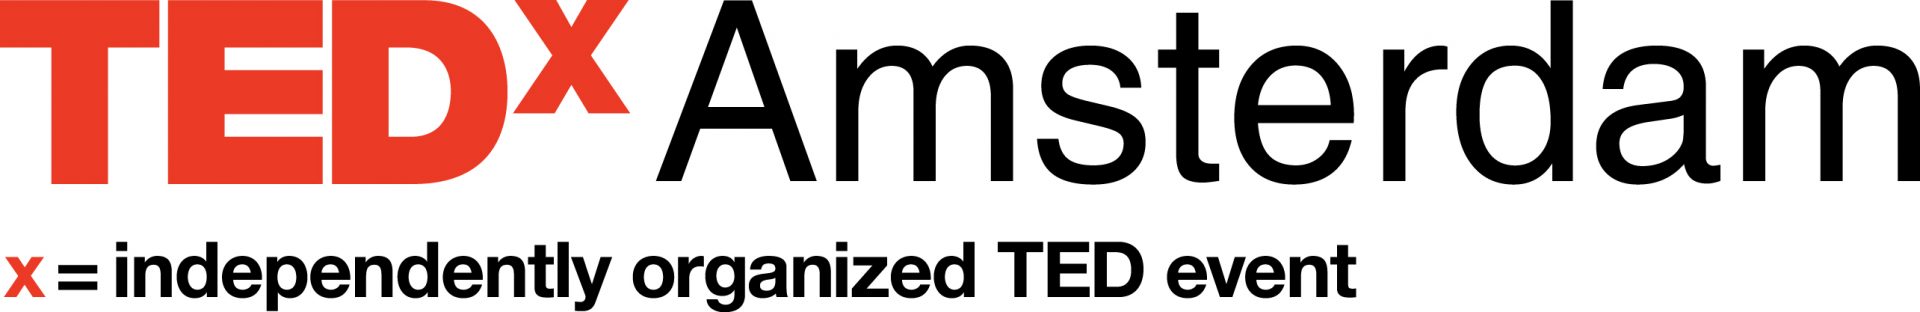 TEDx Amsterdam logo